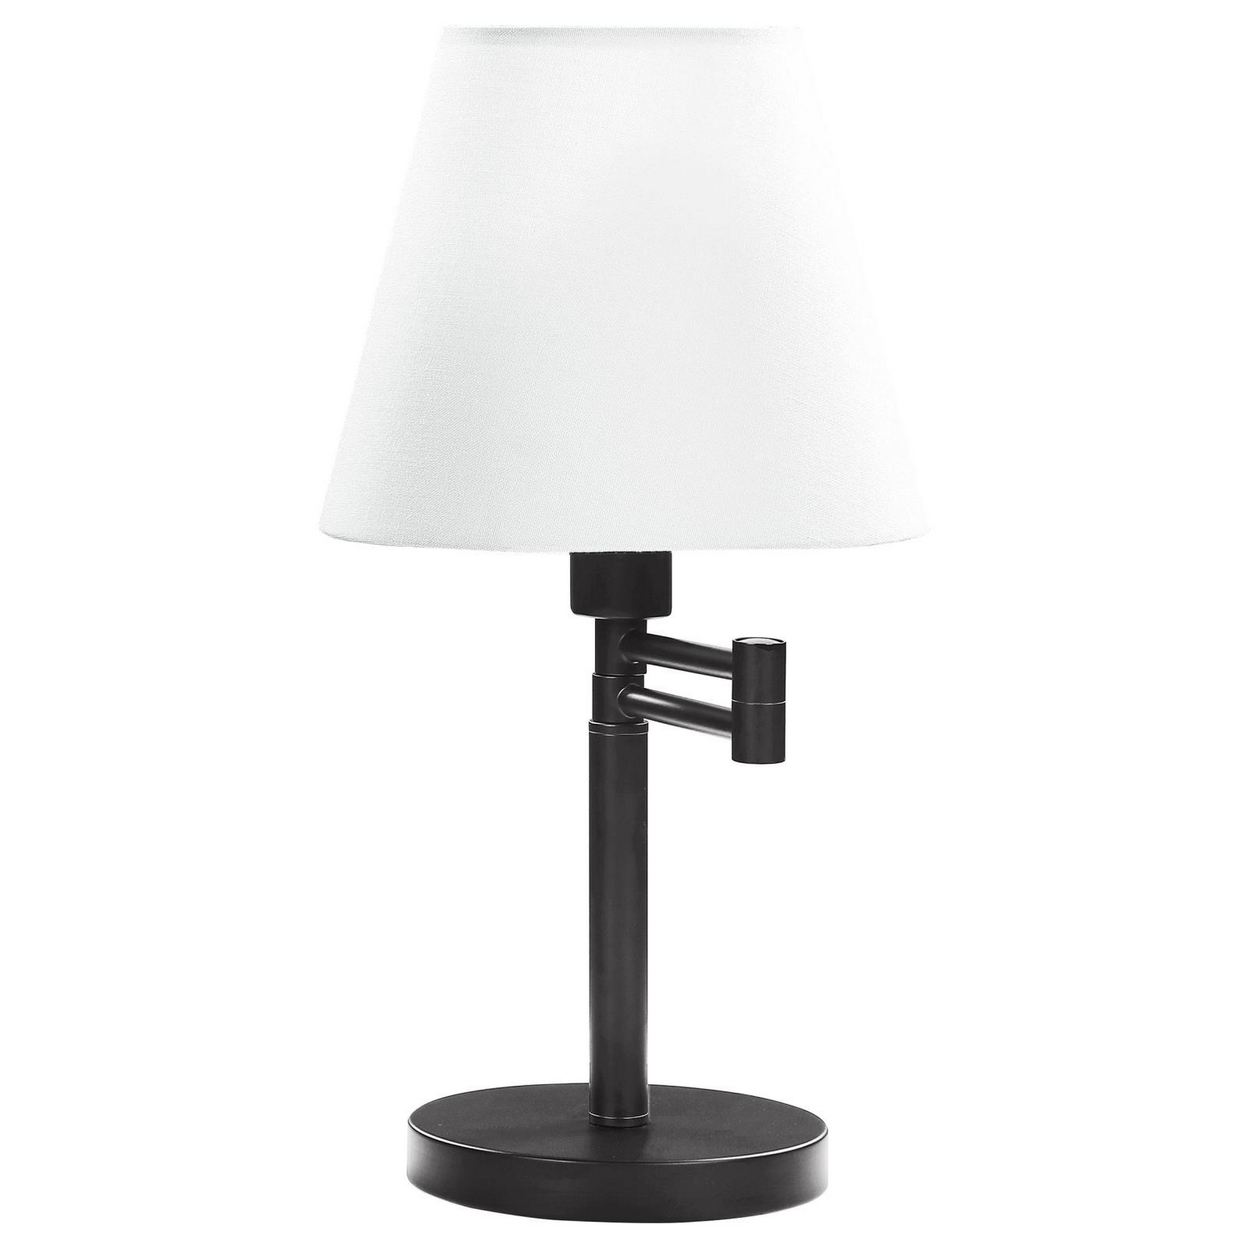 20 Inch Table Lamp, Off White Fabric Empire Shade, Swing Arm, Matte Black - Saltoro Sherpi